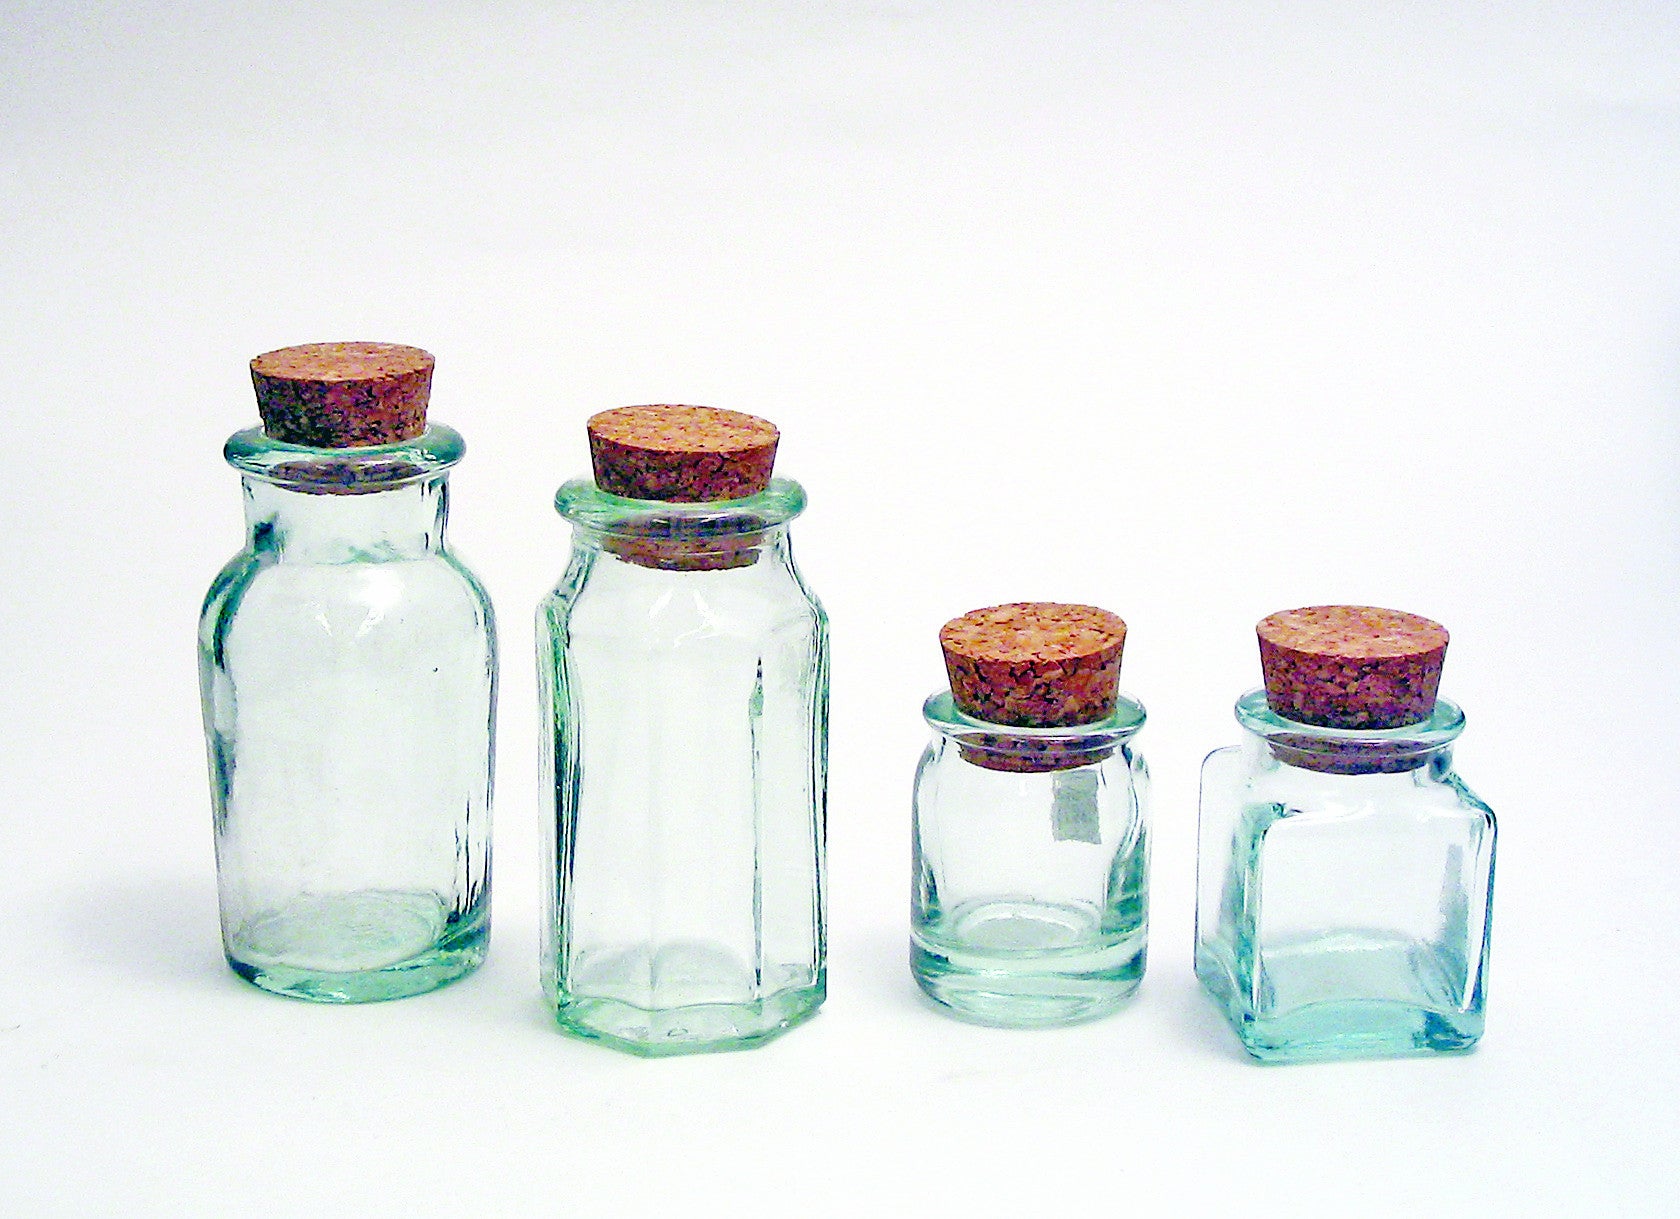  10 Pack Small Glass Bottles With Cork Lids, Mini Mason